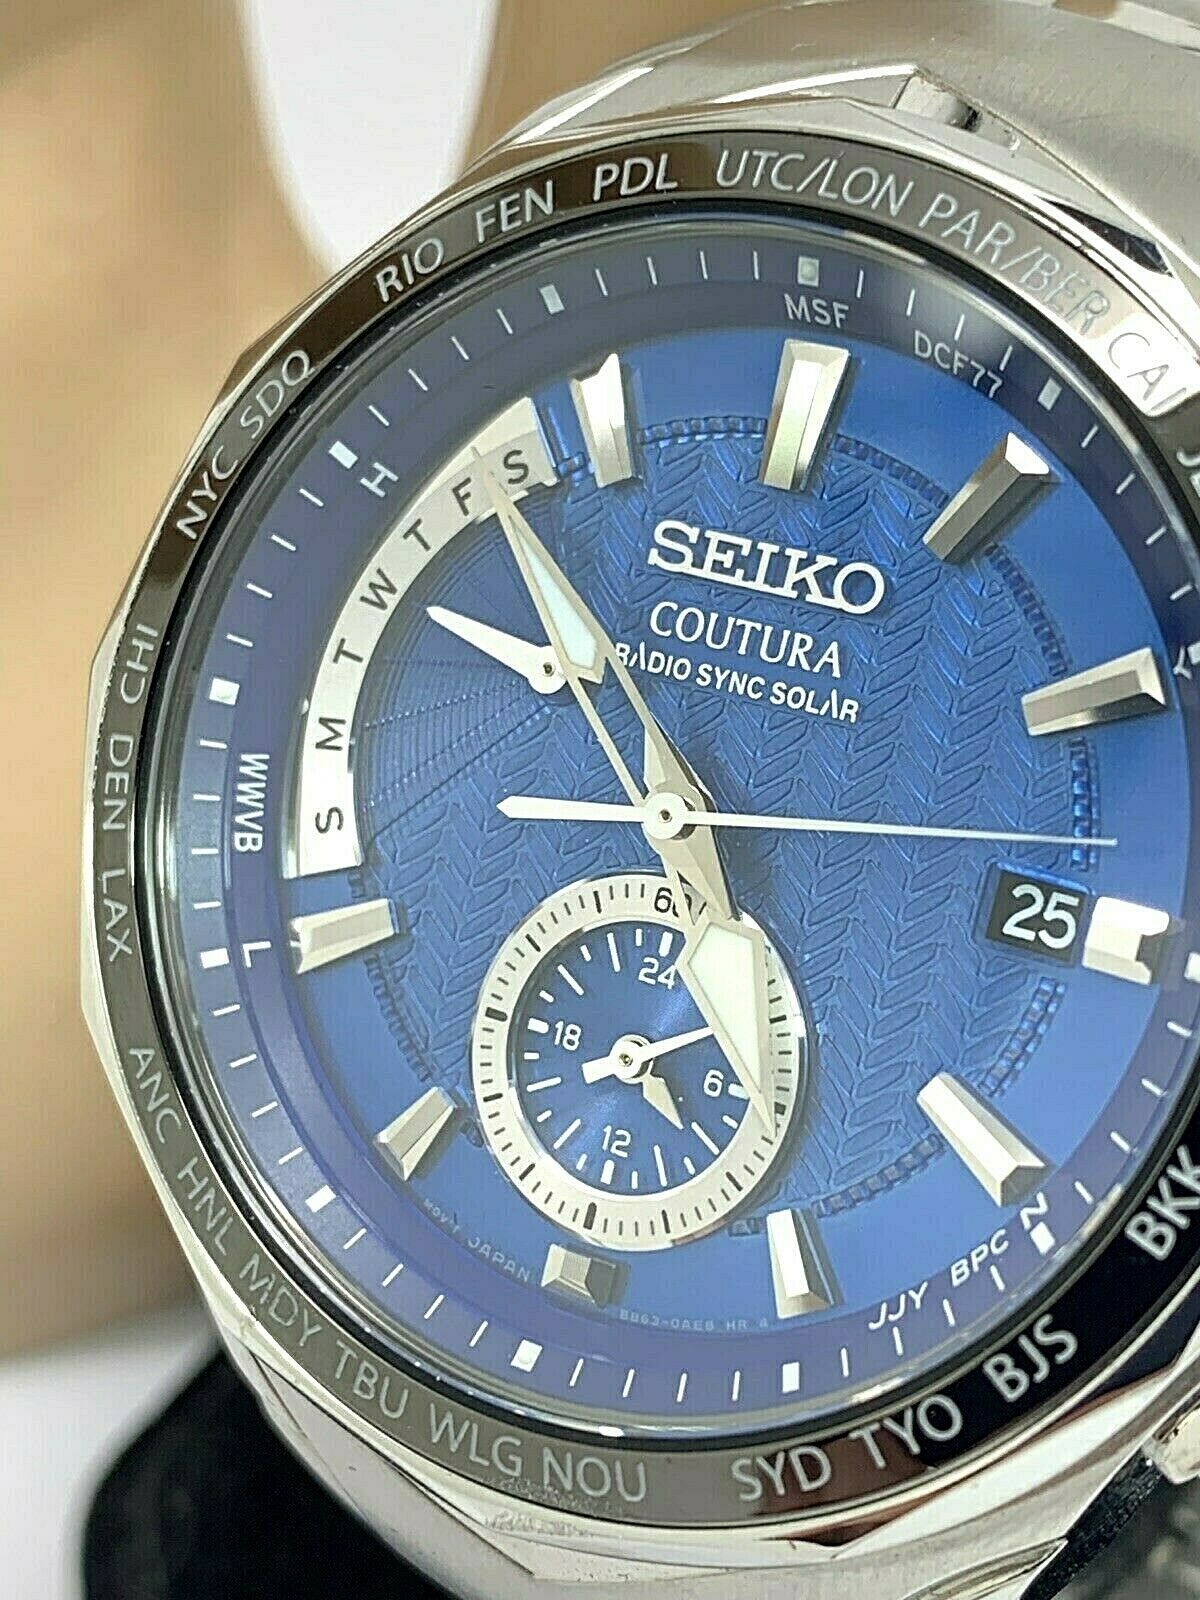 Seiko Men's Coutura Radio Sync Solar World Time Stainless Steel Watch SSG019  | WatchCharts